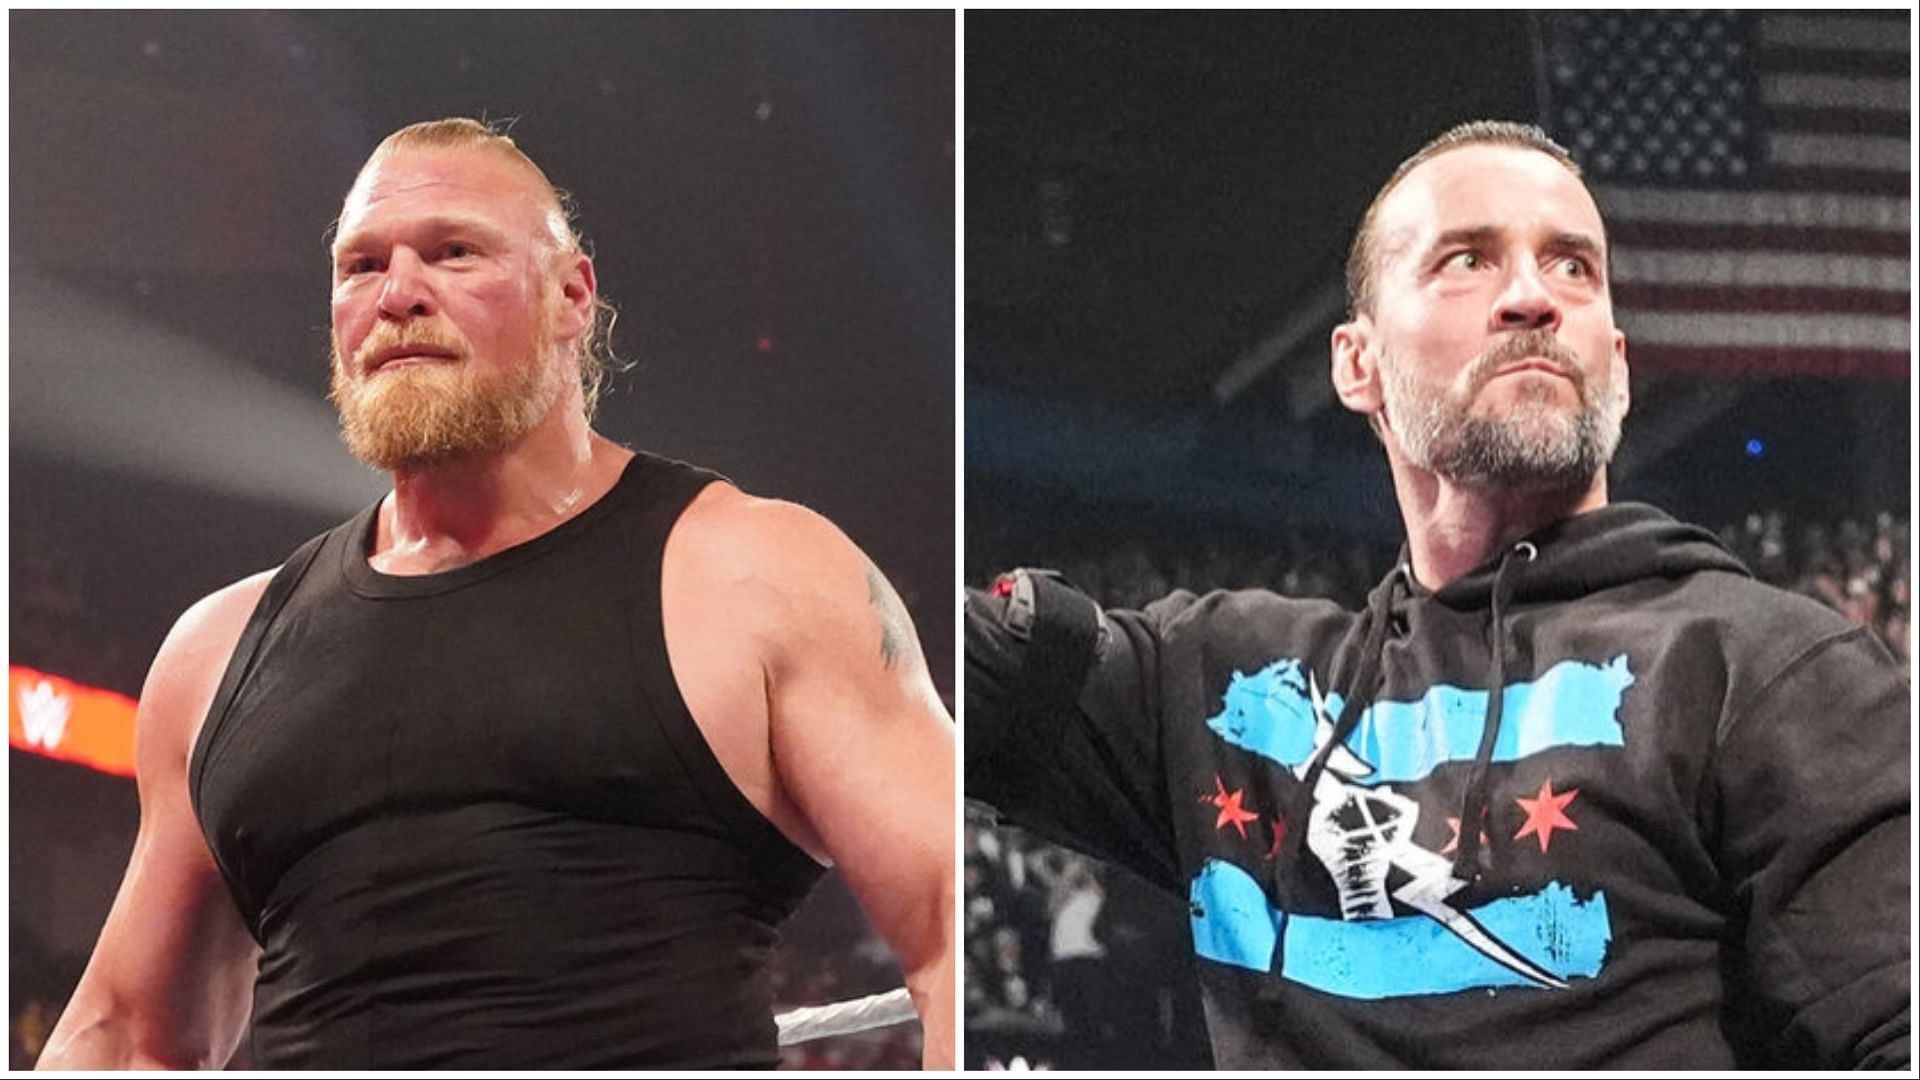 WWE Superstars CM Punk and Brock Lesnar